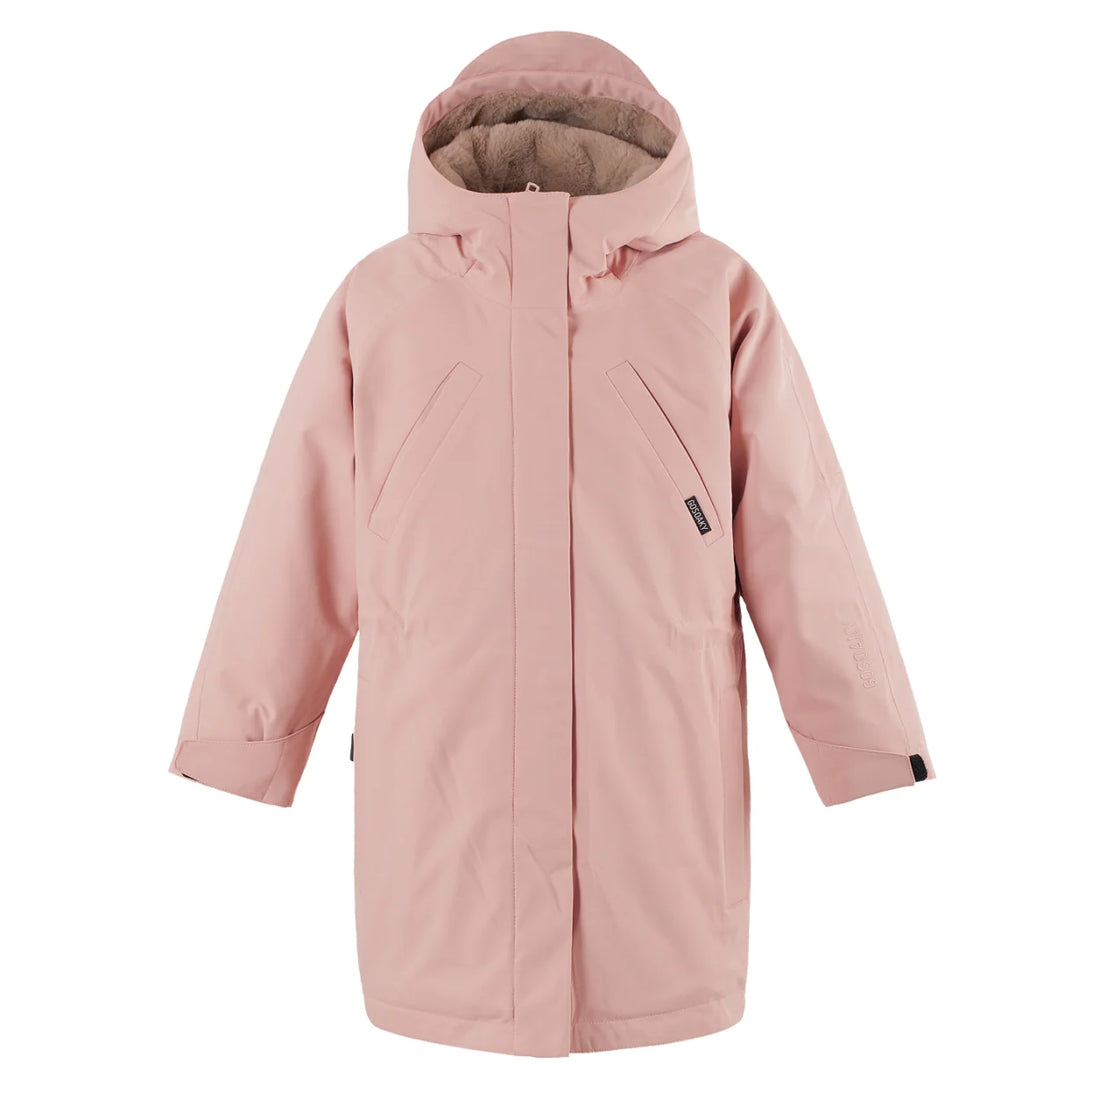 Gosoaky - rain coat - fast camel - evening pink